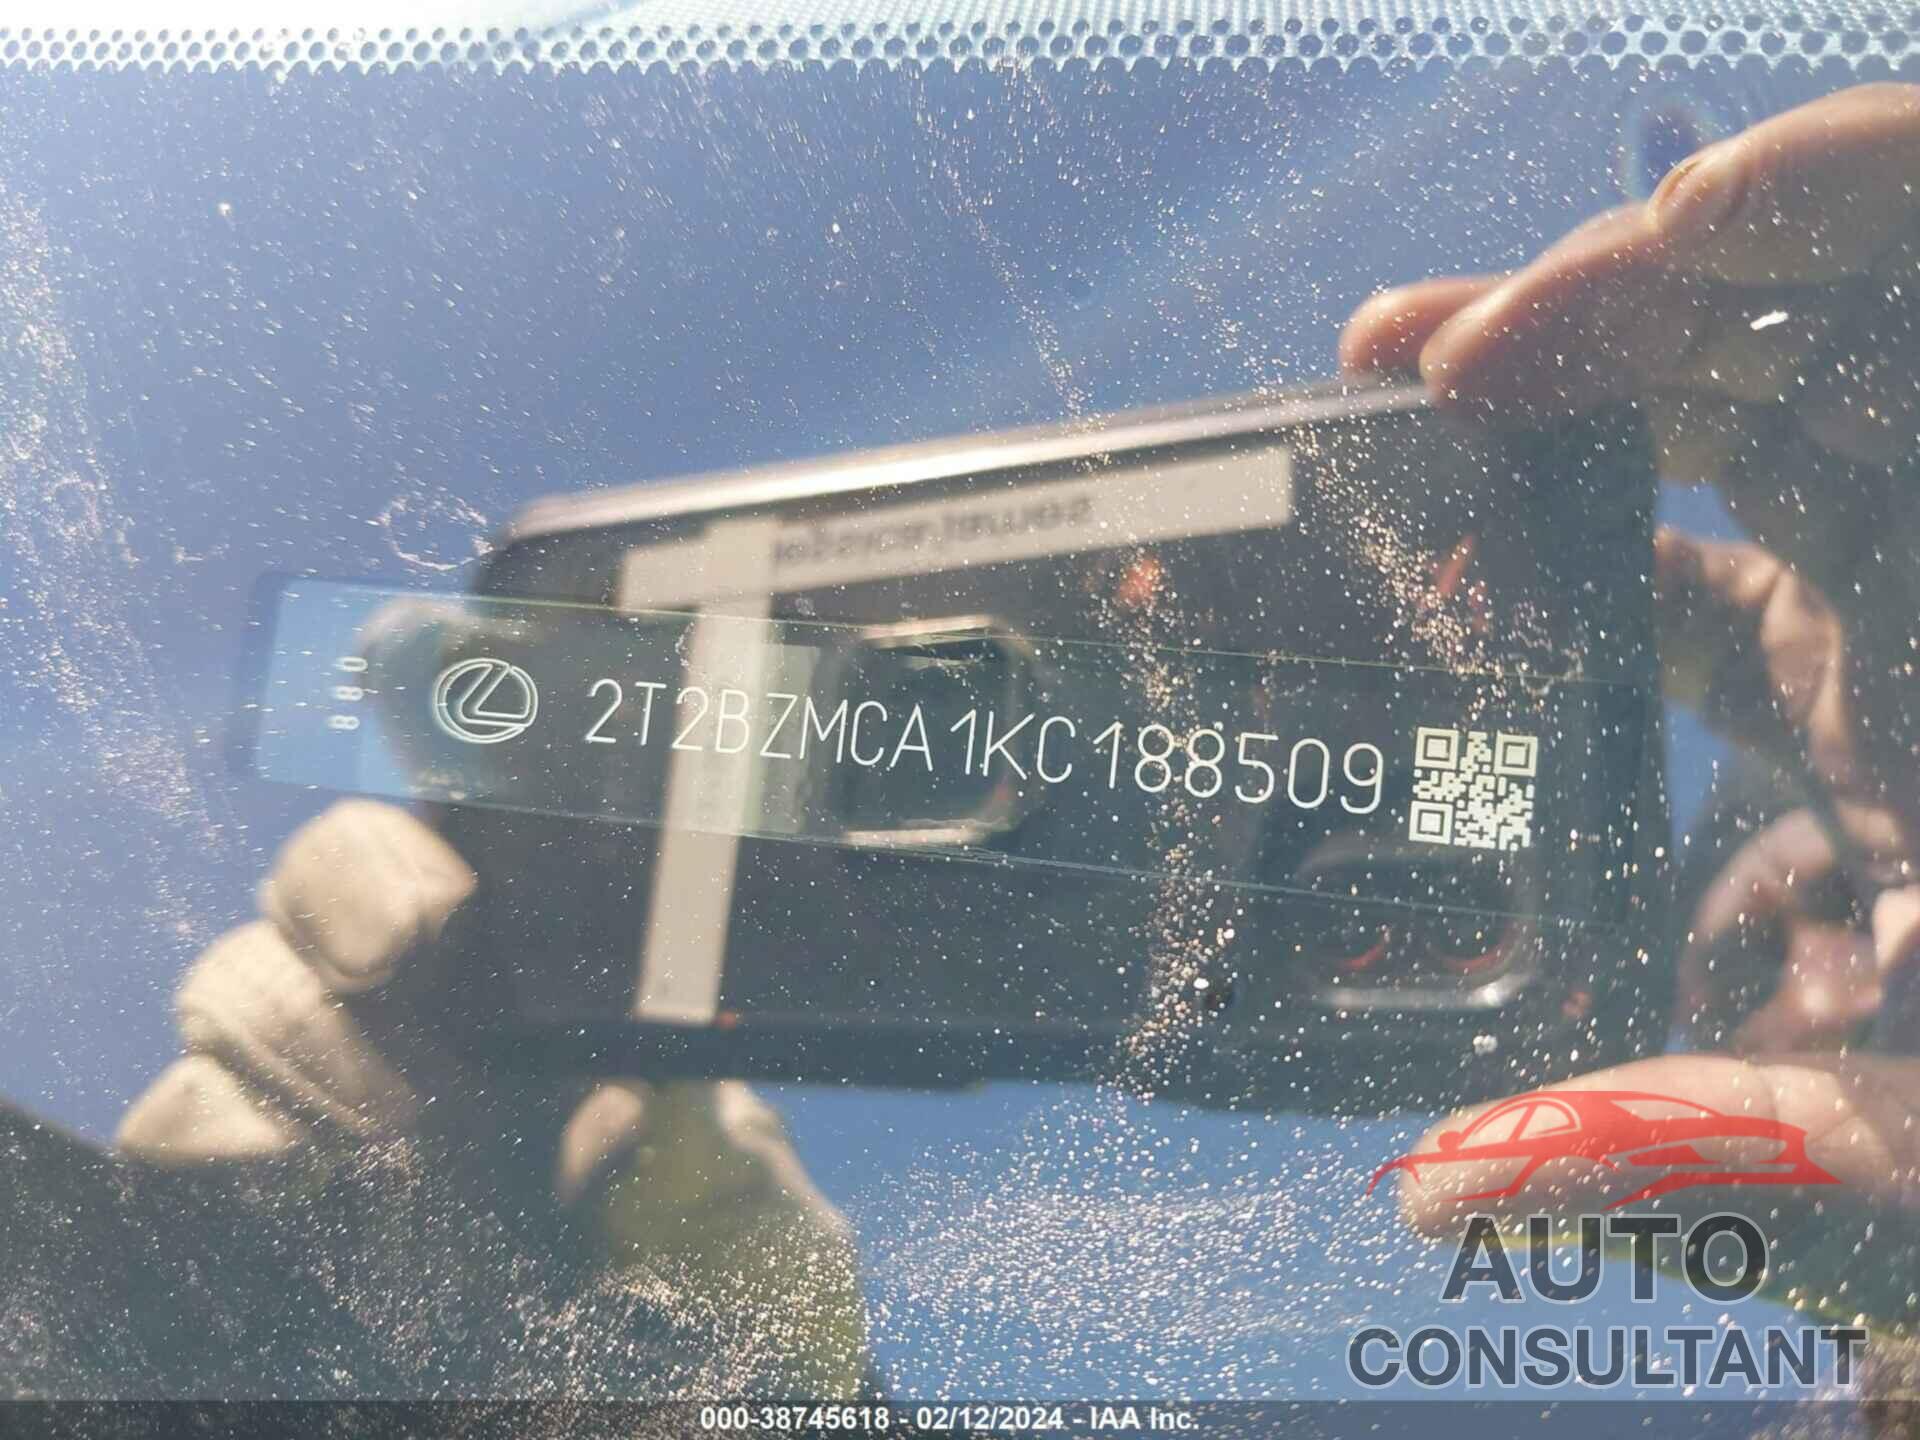 LEXUS RX 350 2019 - 2T2BZMCA1KC188509